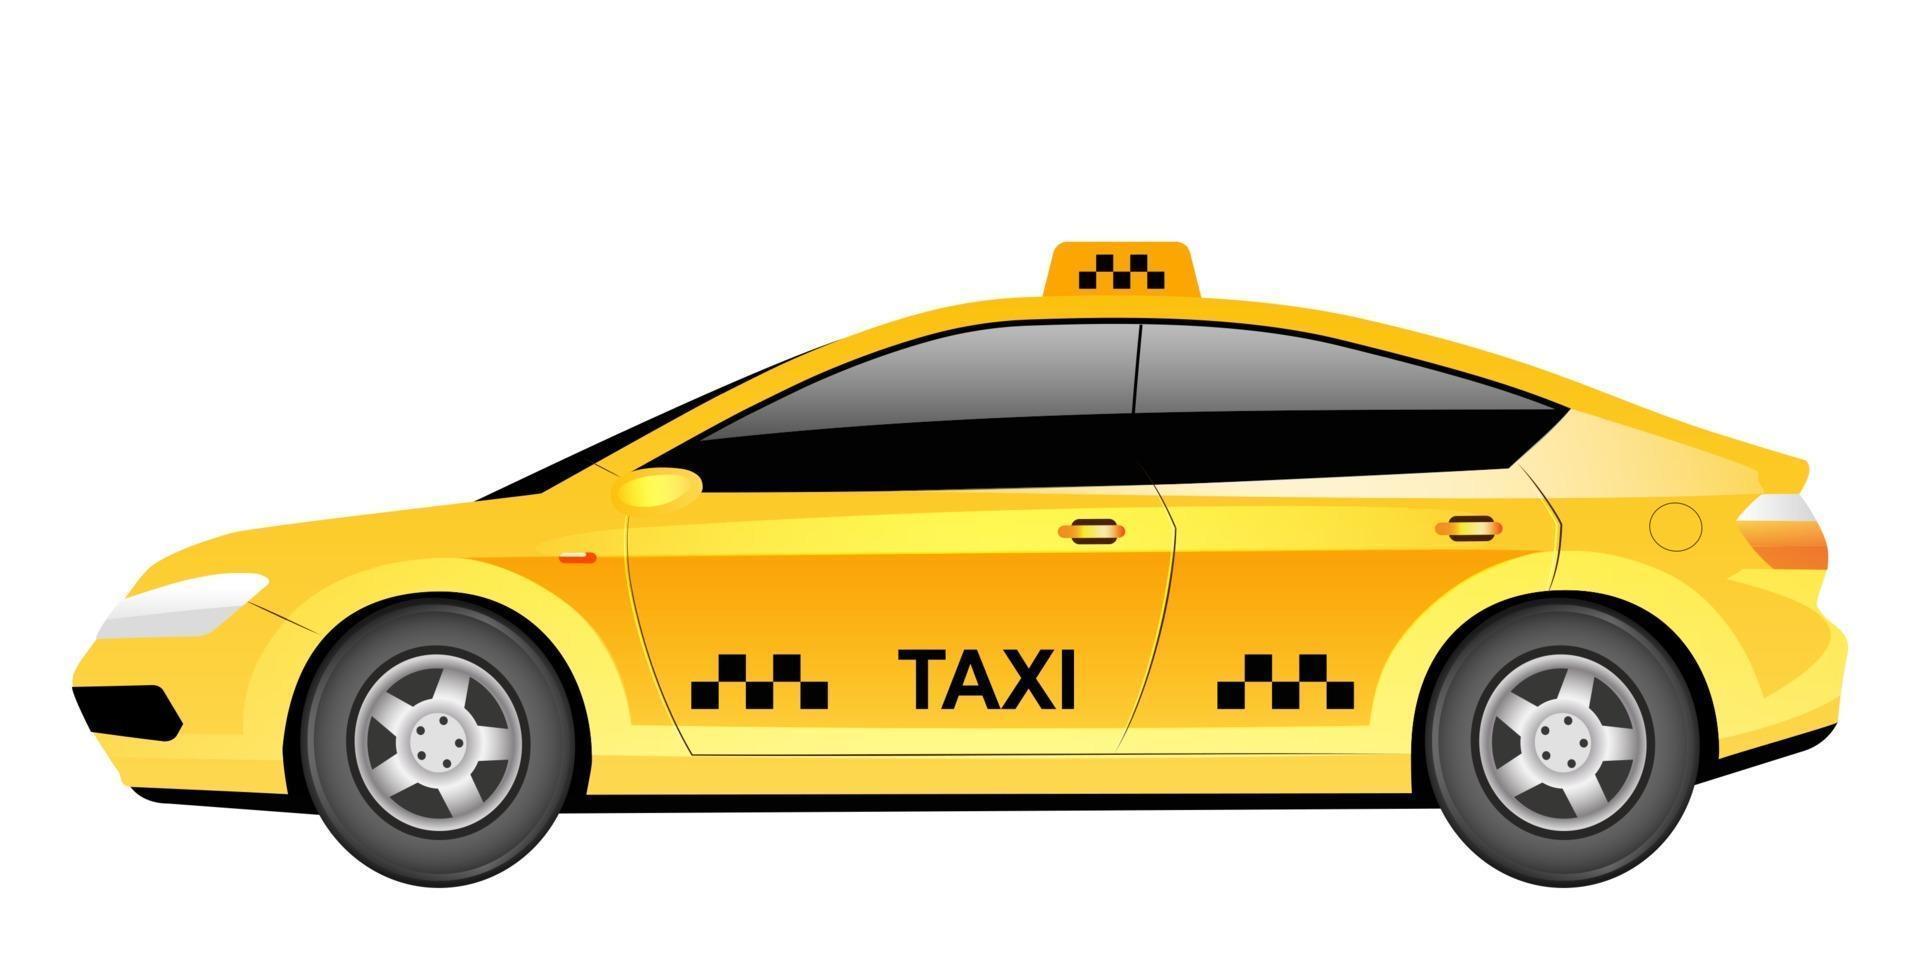 Taxi car cartoon vector illustration